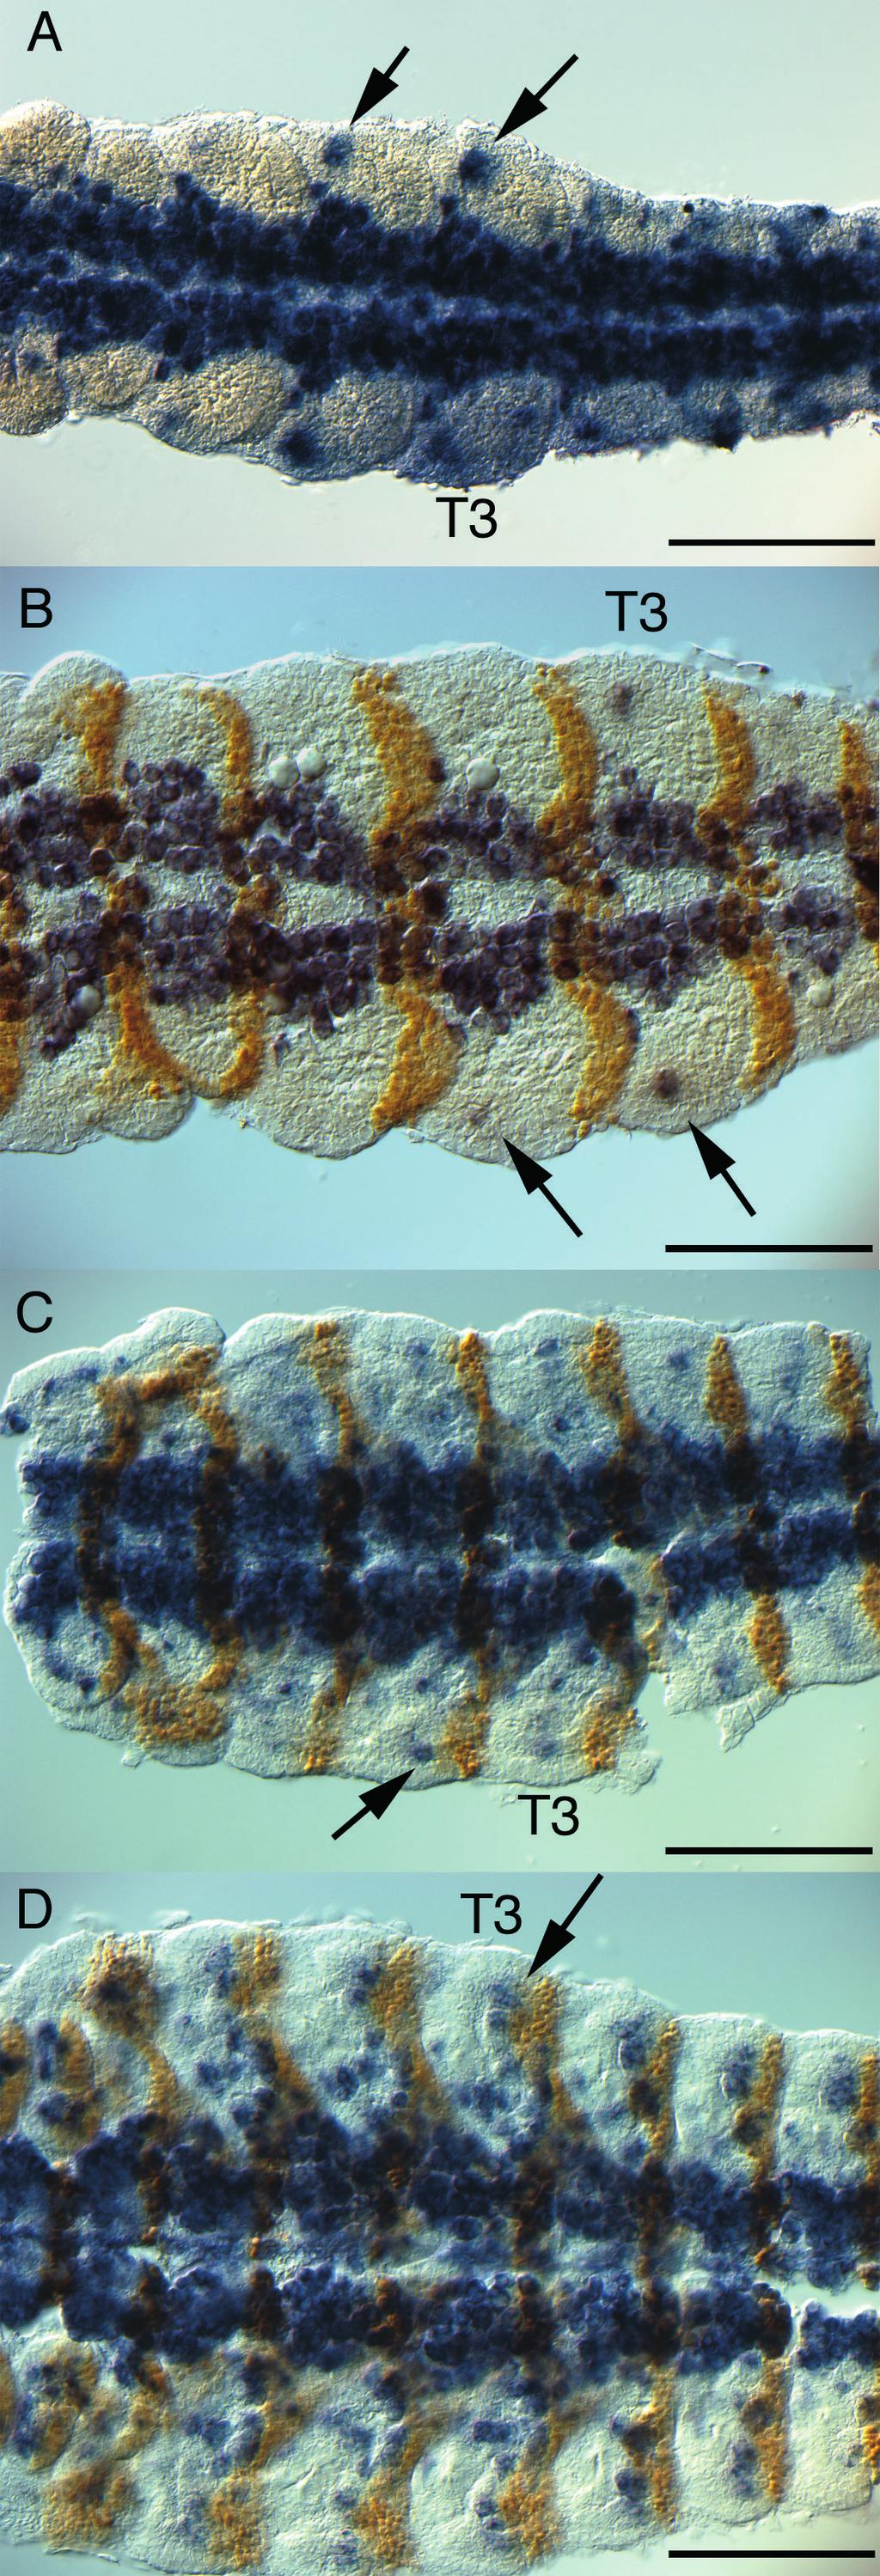 Journal of Heredity 2004:95(5) Figure 6. Regulation of Distal-less during appendage development in D. melanogaster.